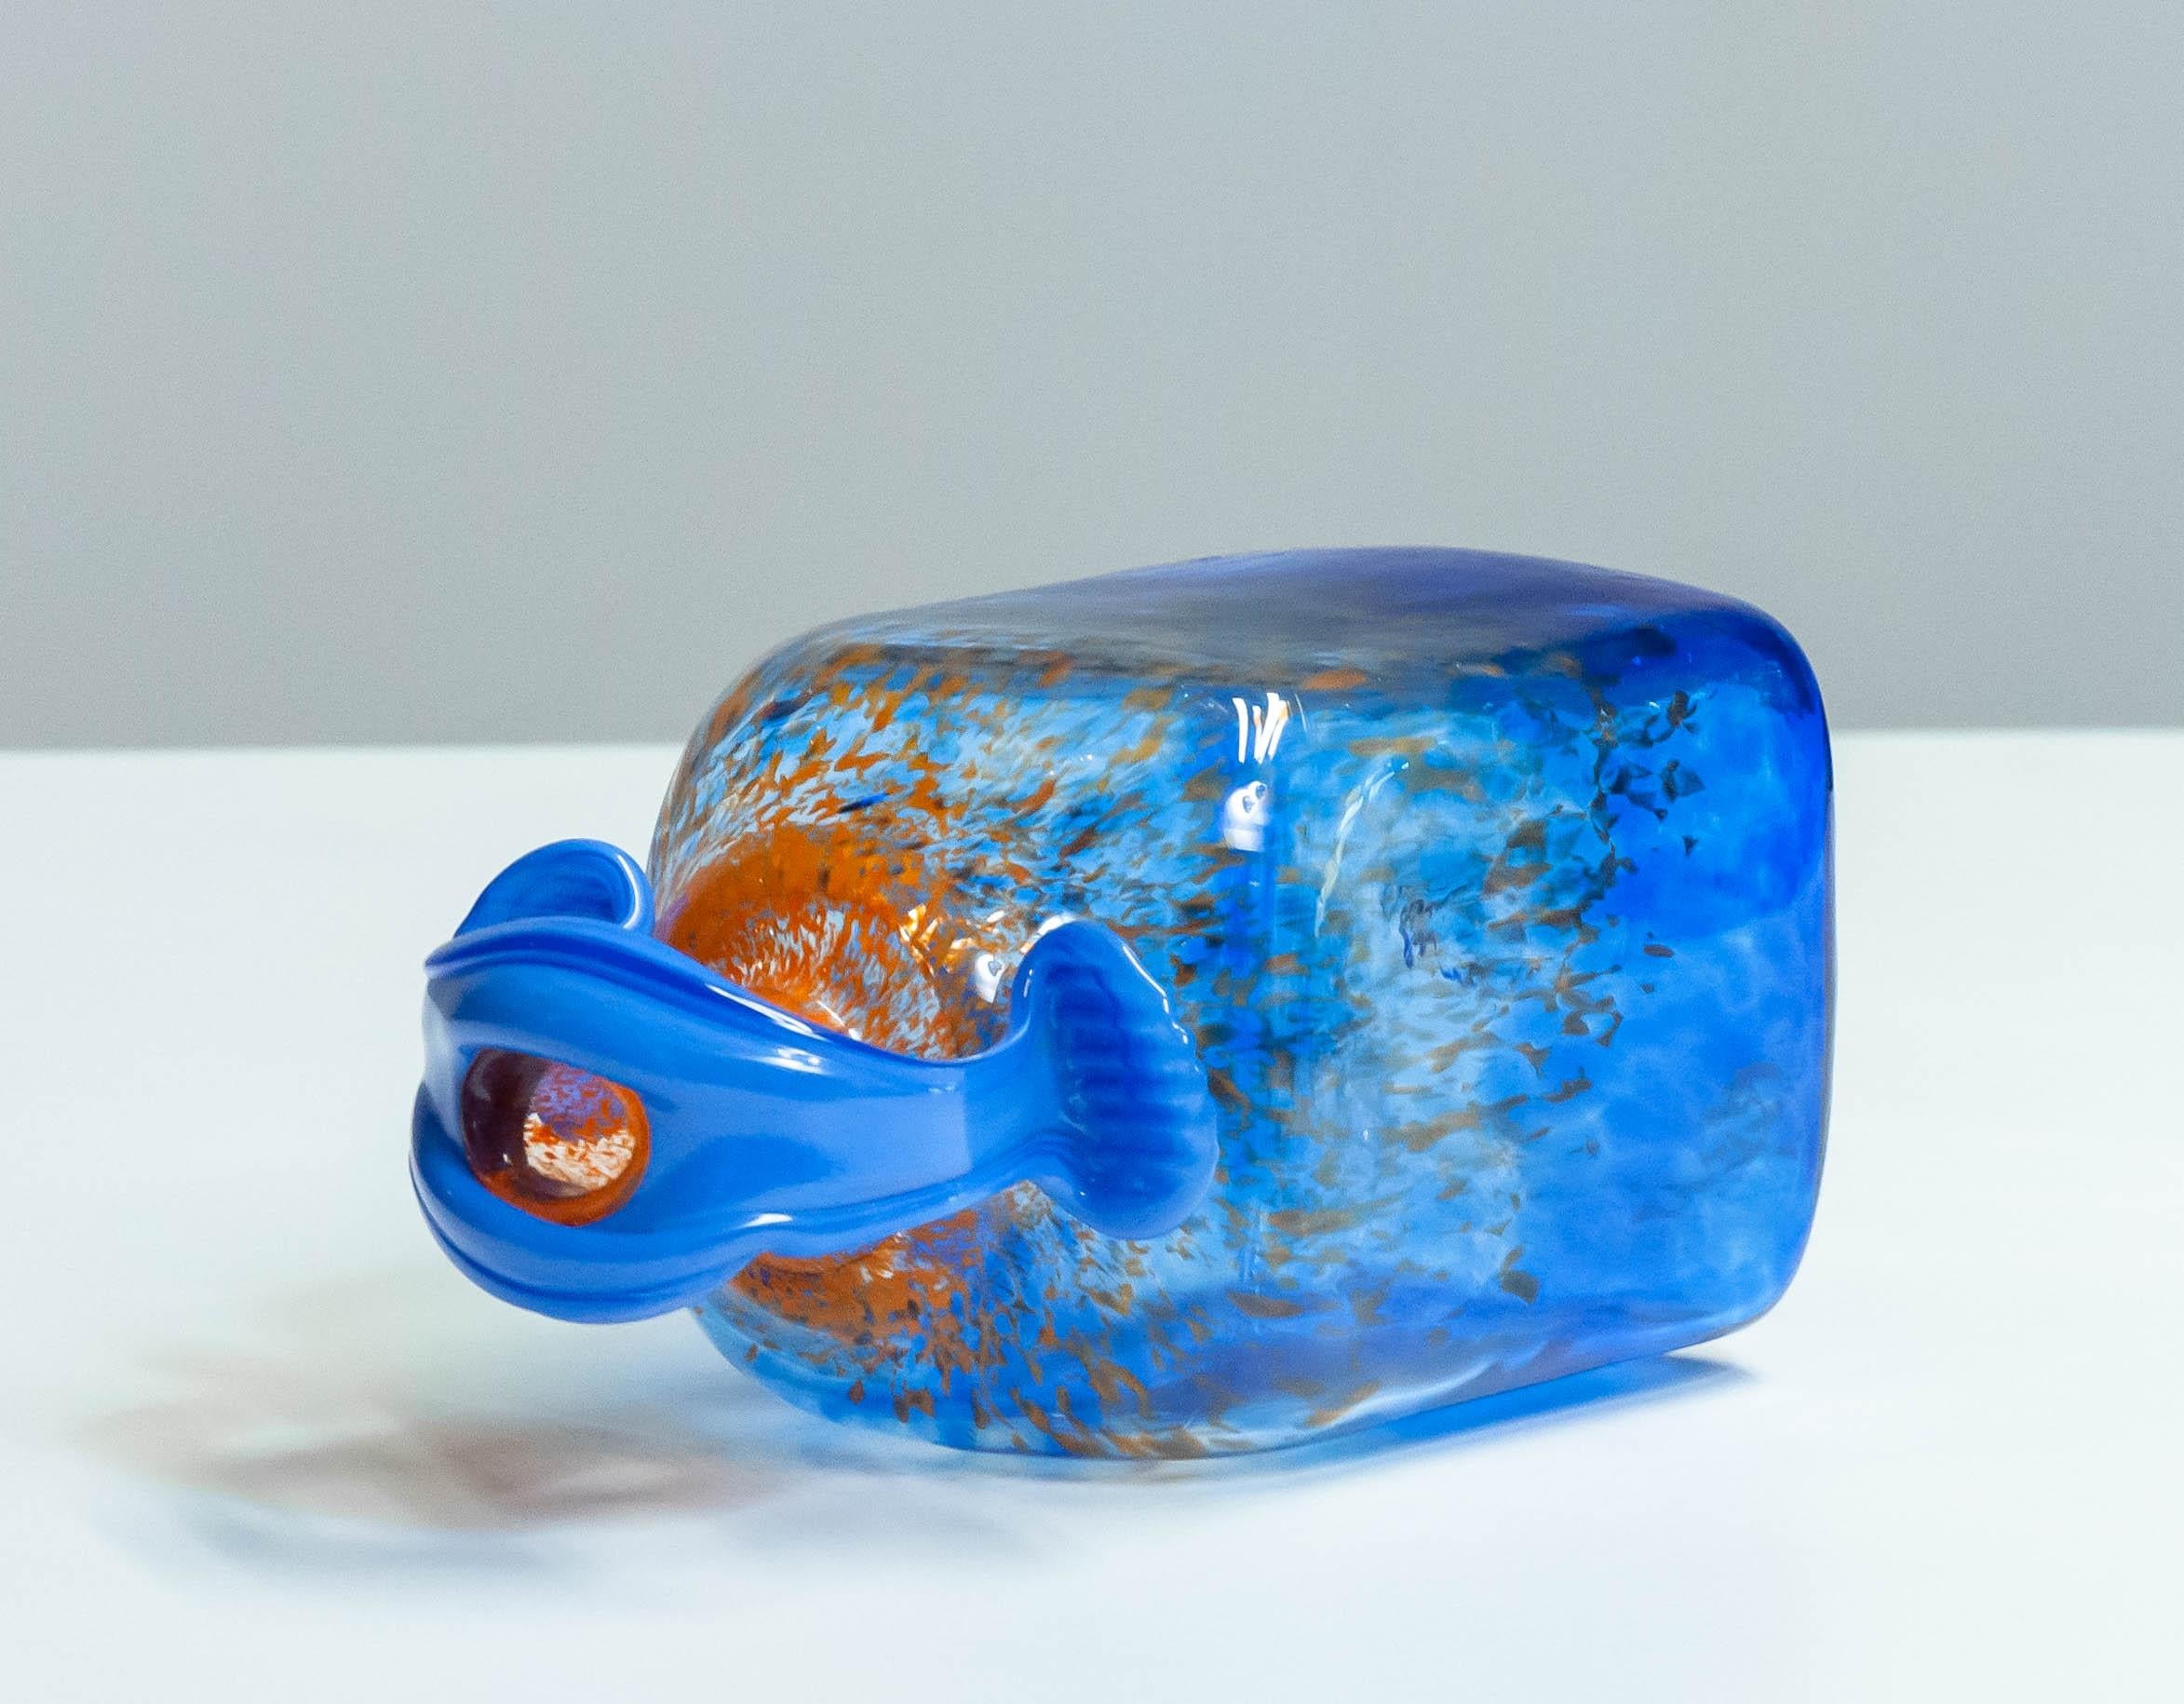 1980s Blue Art Glass Bottle Handmade by Staffan Gellerstedt at Studio Glashyttan For Sale 3